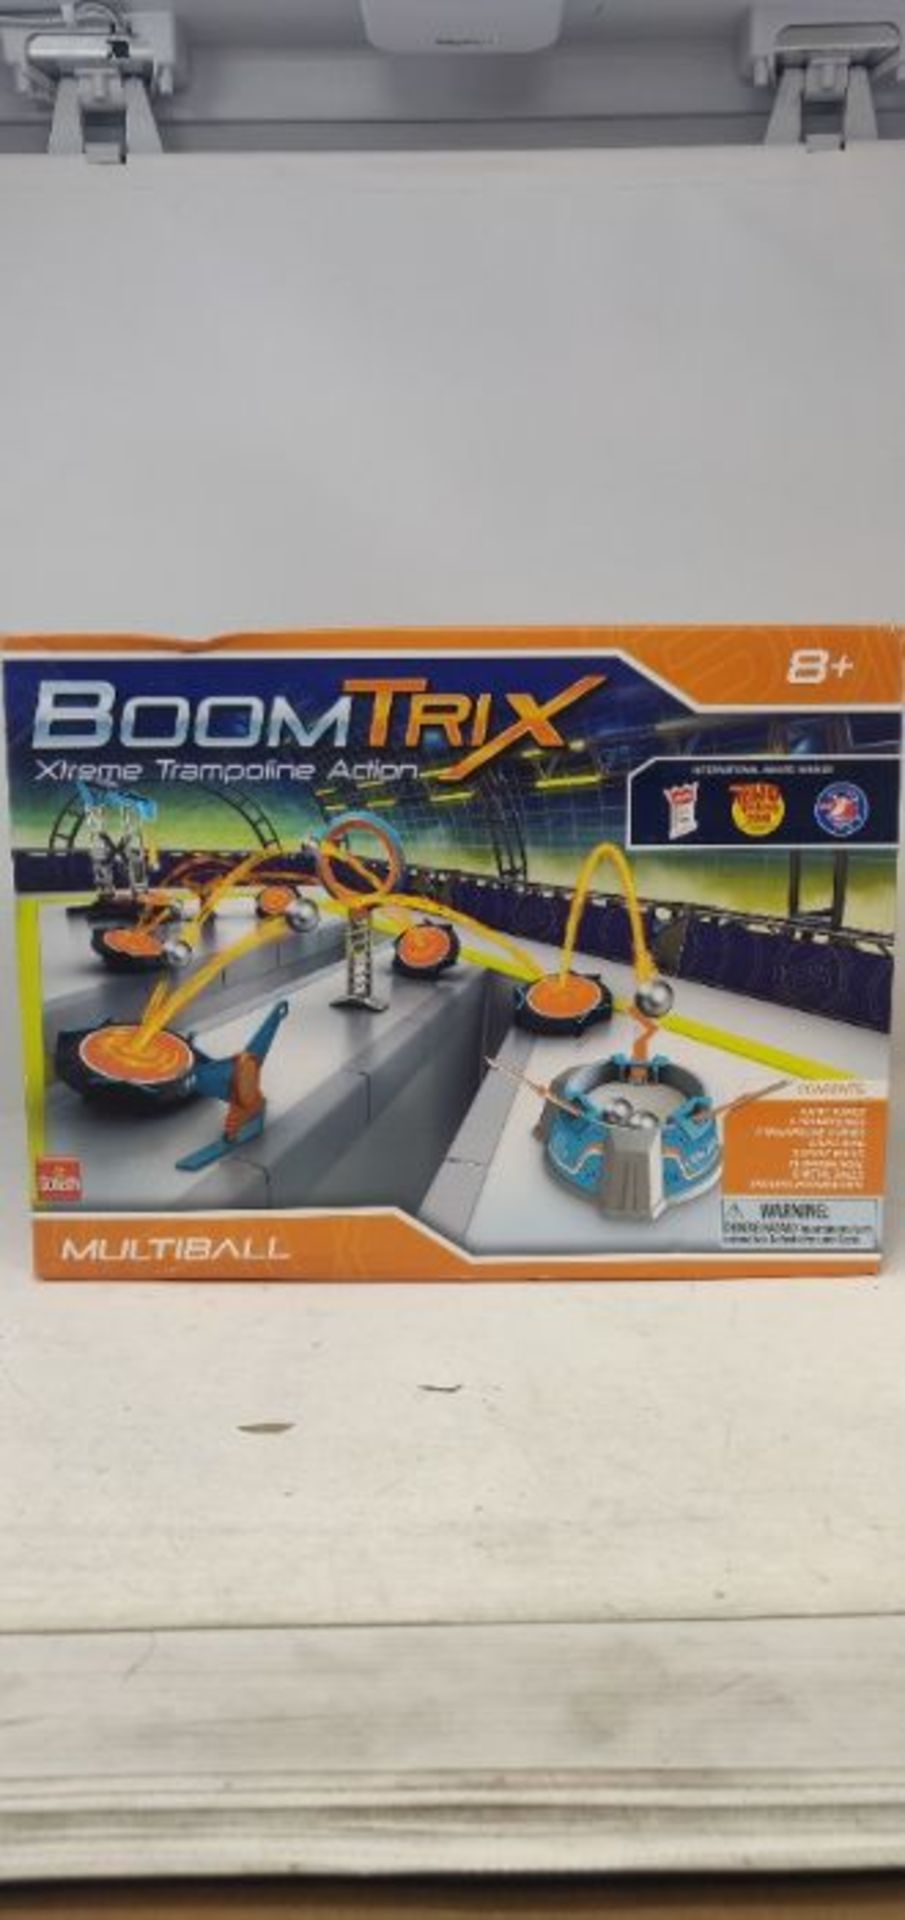 BoomTrix Multi-Colourball, Xtreme Trampoline Action for Kids Aged 8+, Multi-Colour - Image 2 of 3